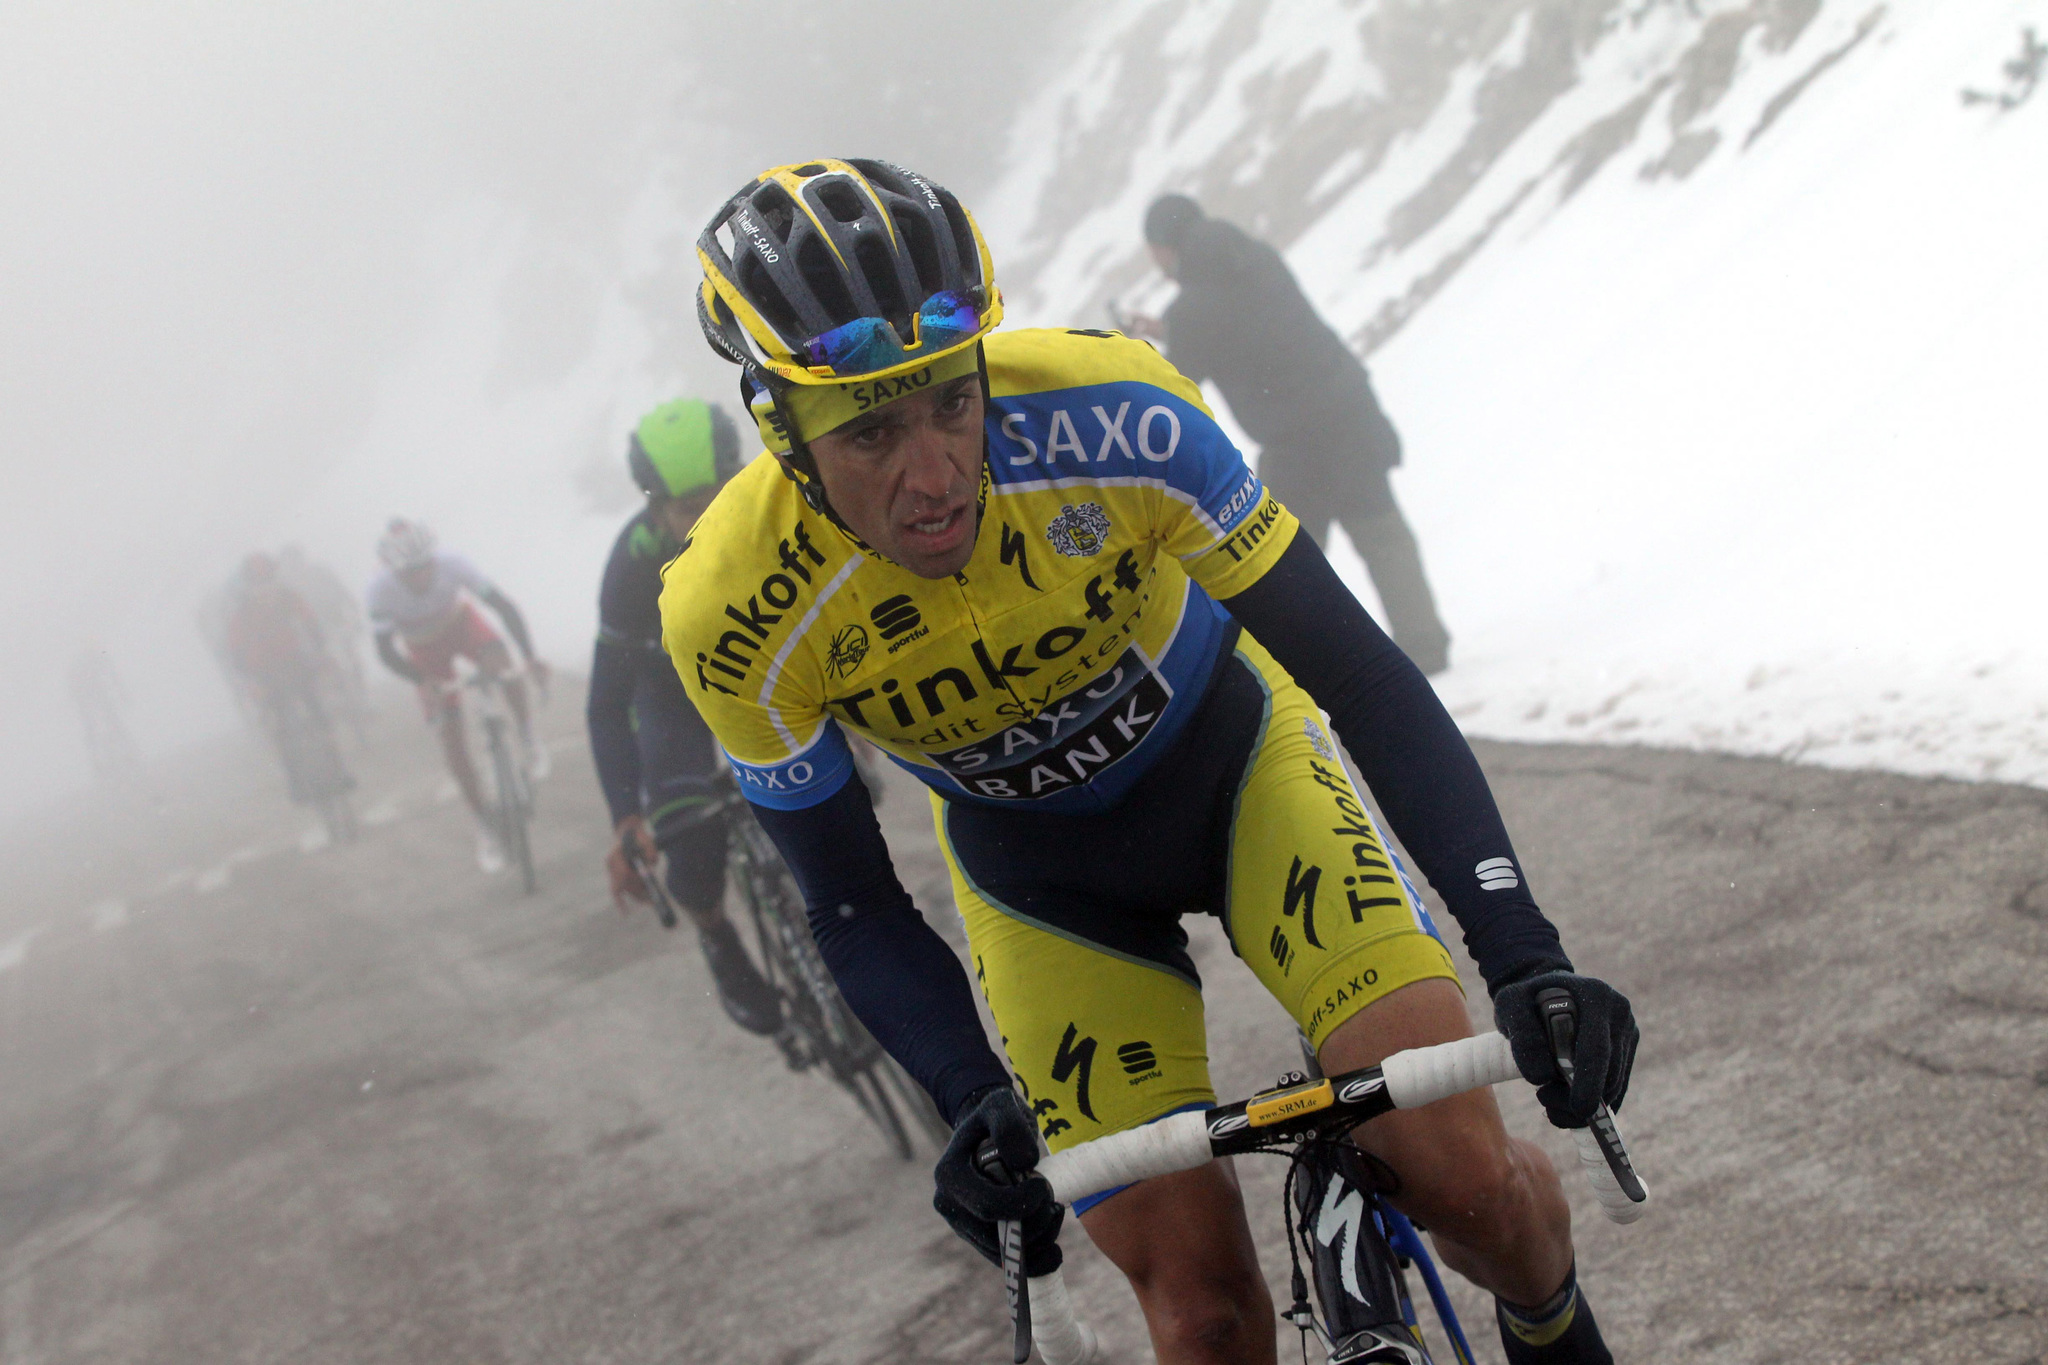 /assets/contentimages/Tour_de_France_Alberto_Contador.jpg